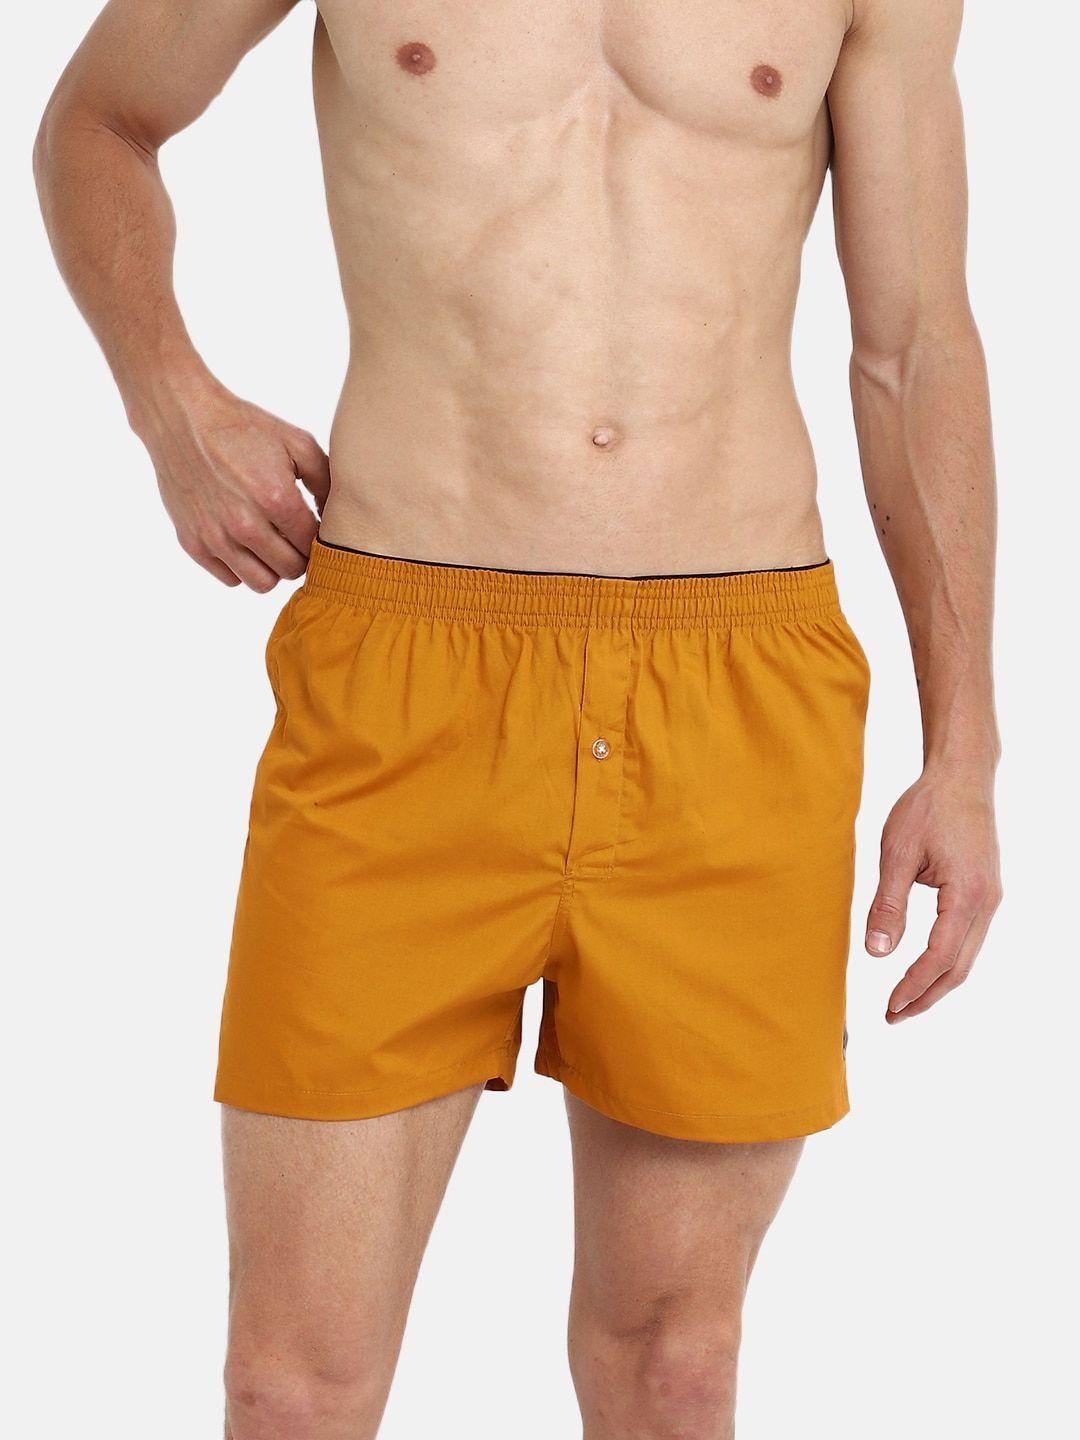 almo wear men mustard yellow cotton inner boxers b002-s-120